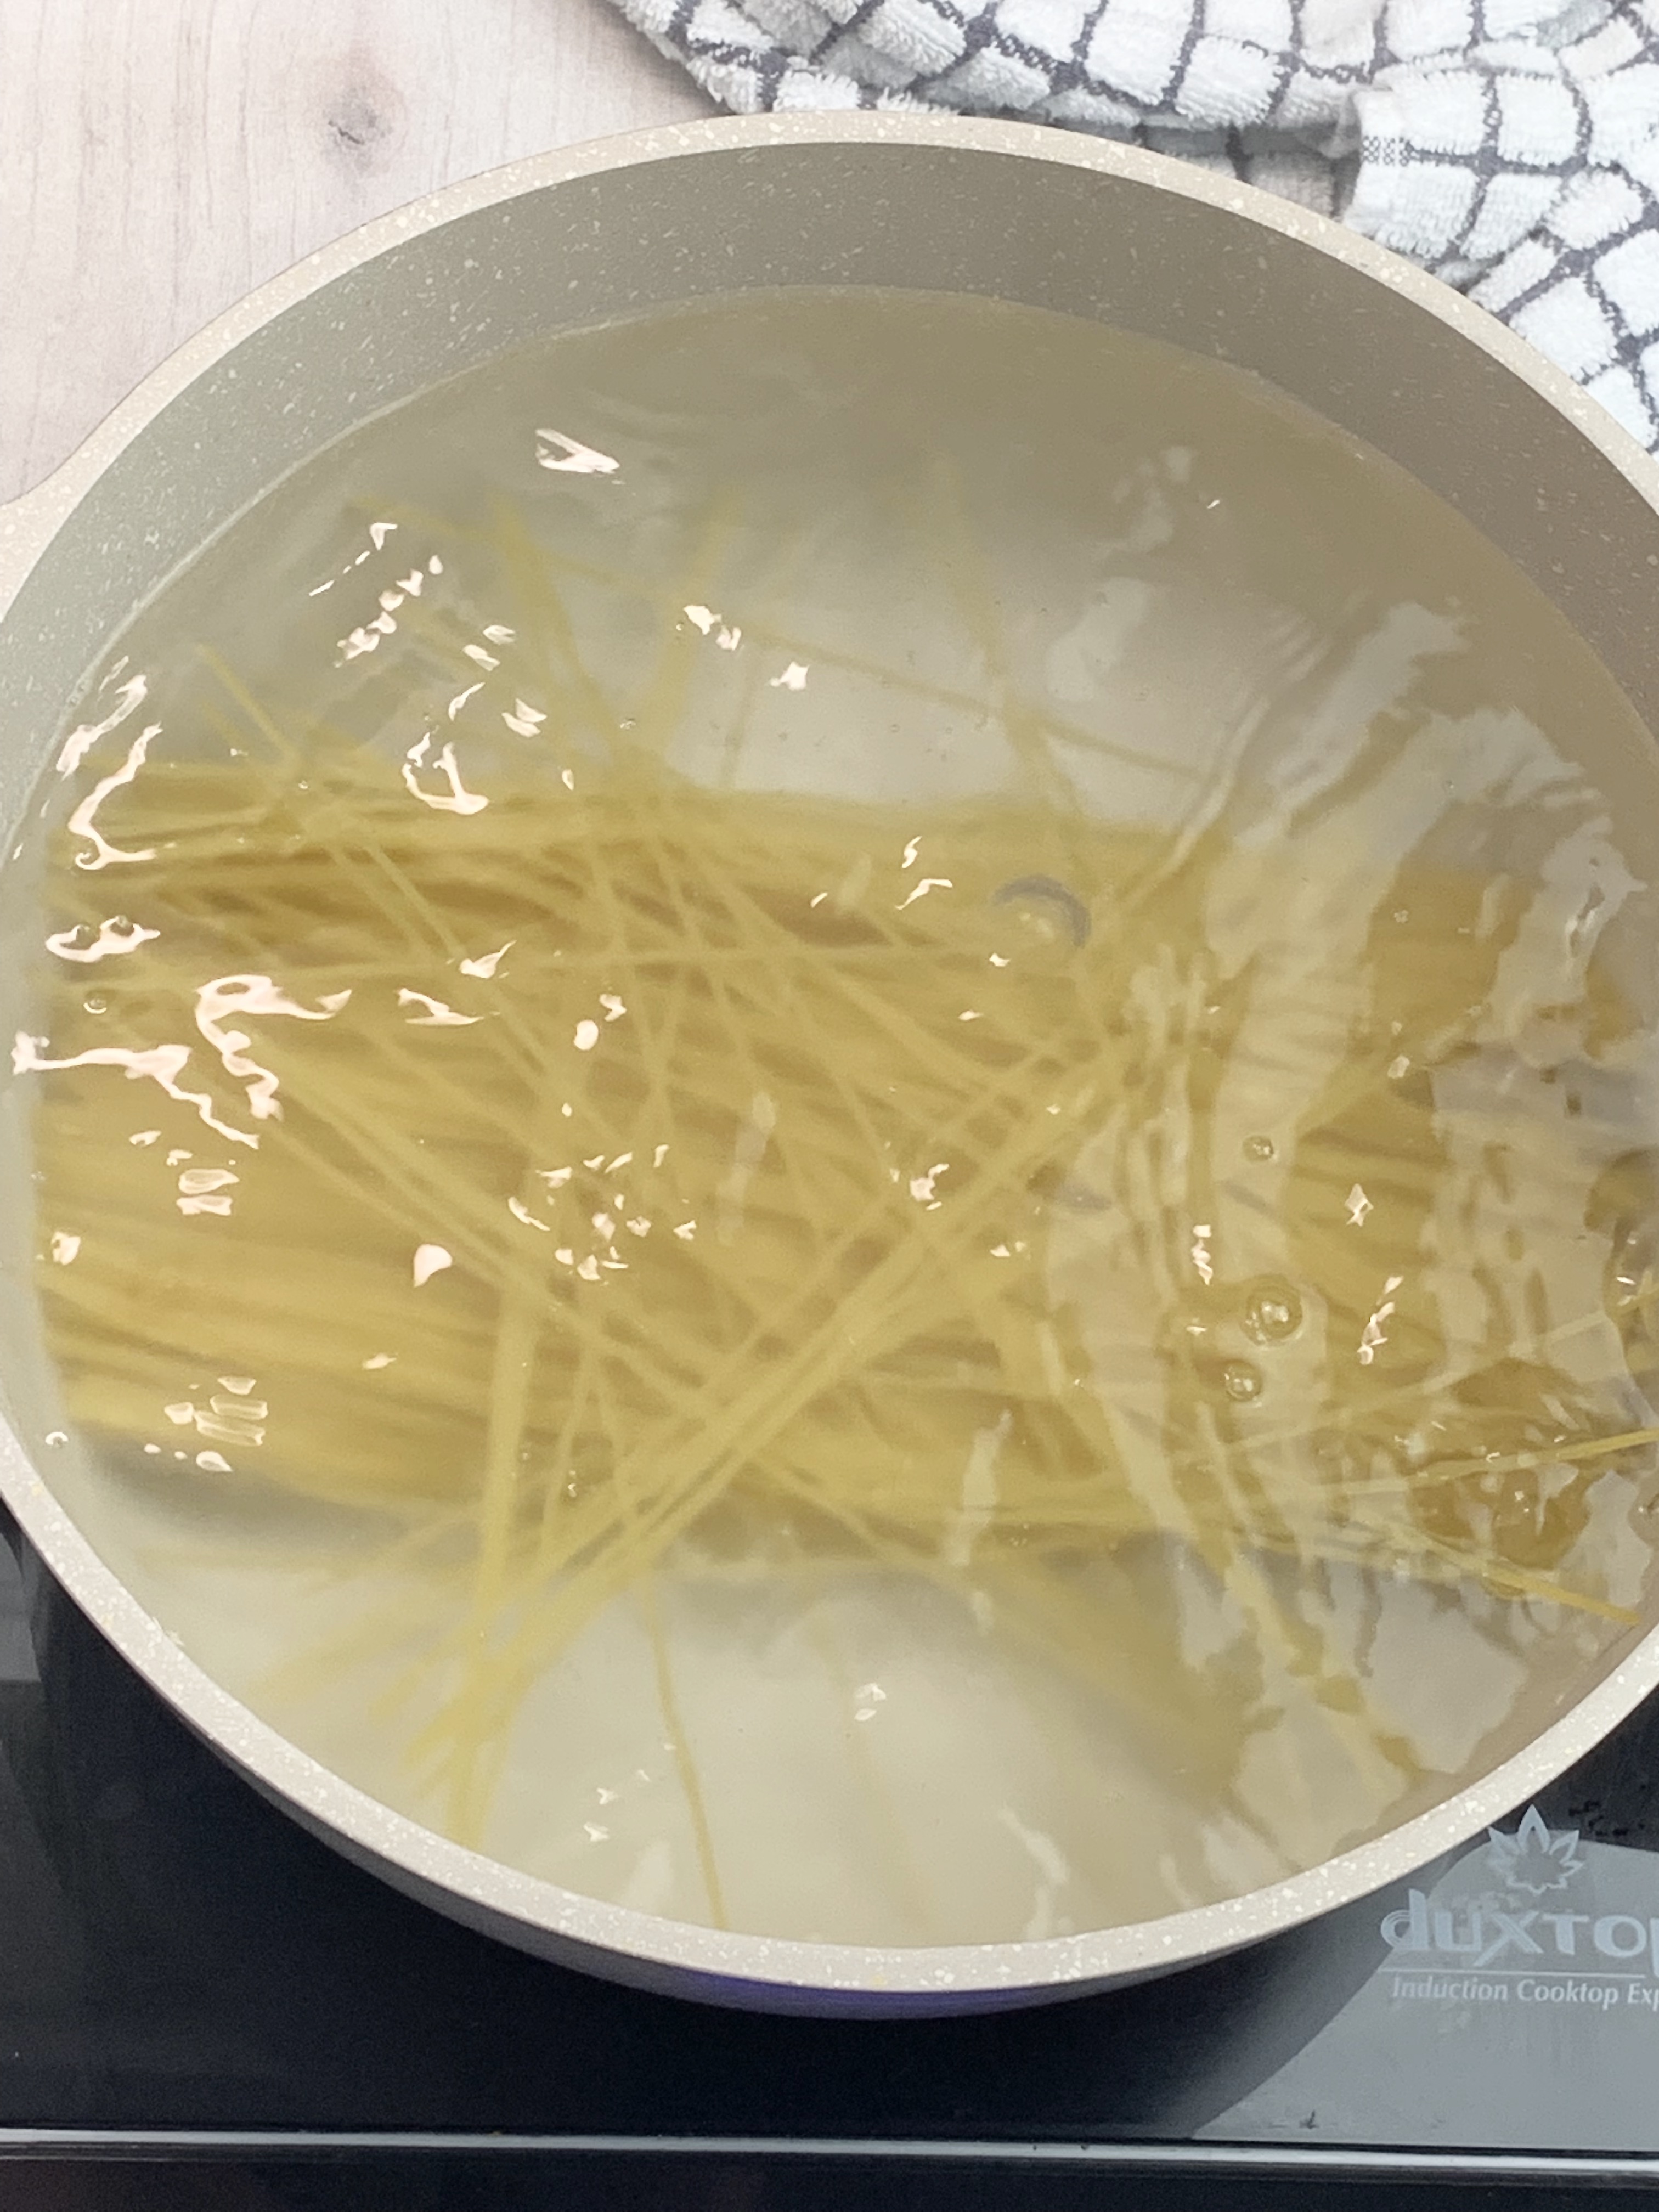 Spaghetti boiling in pot